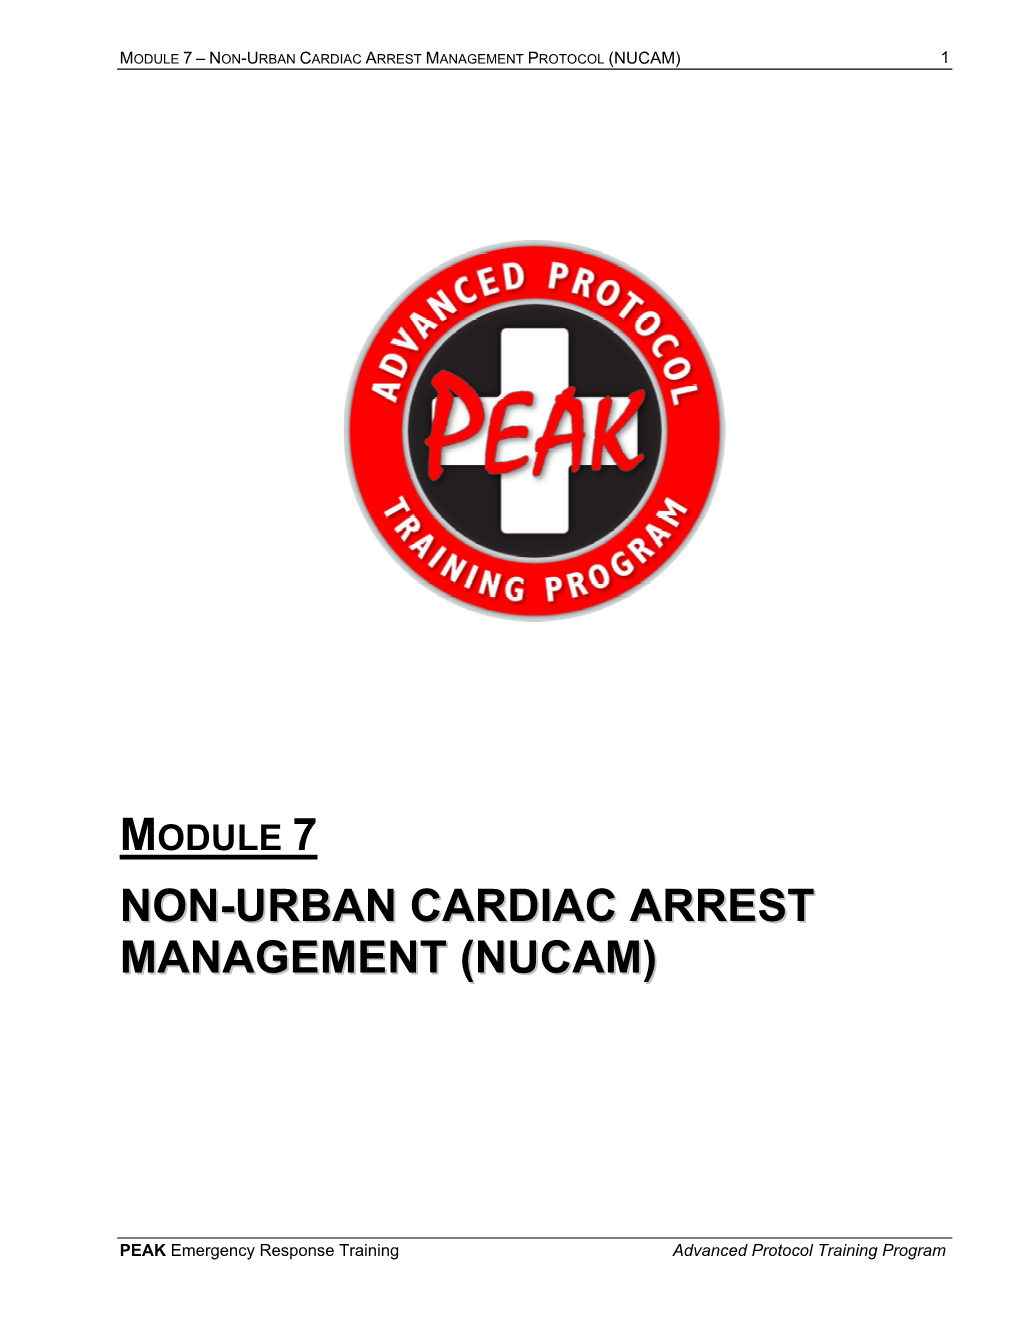 Non-Urban Cardiac Arrest Management (Nucam)